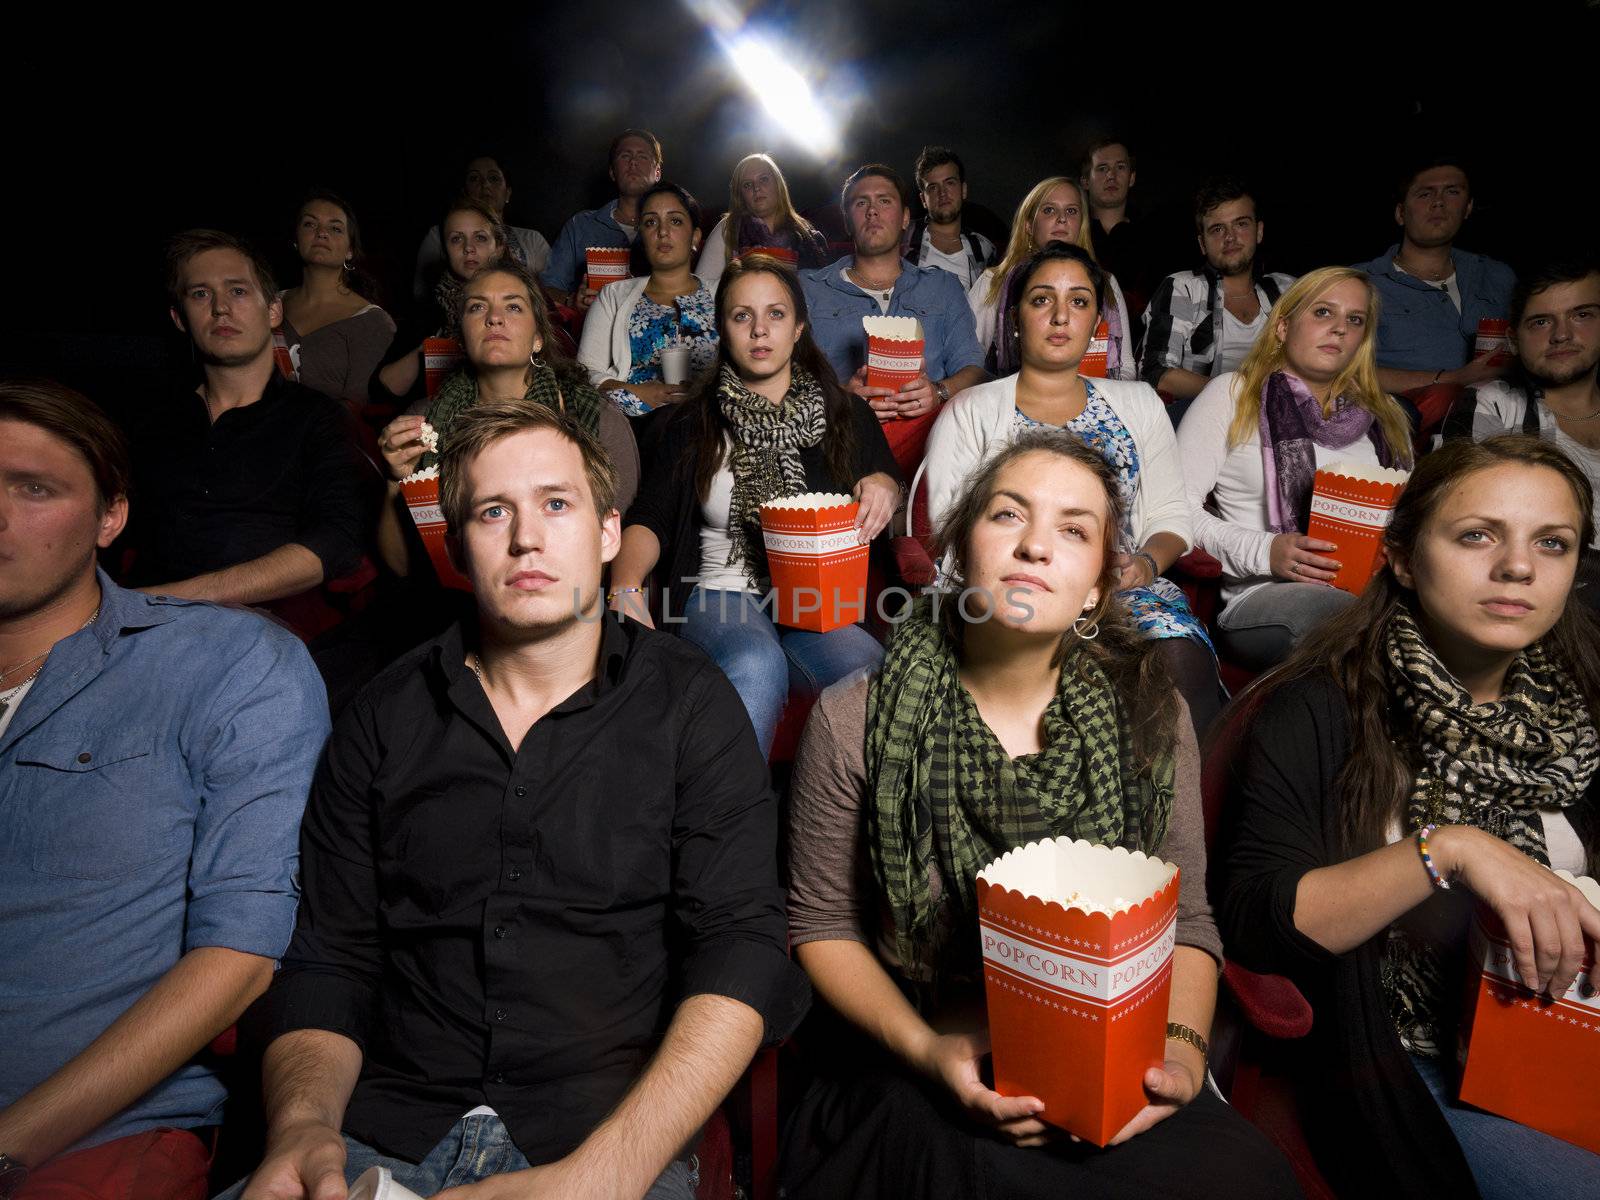 People at the cinema by gemenacom